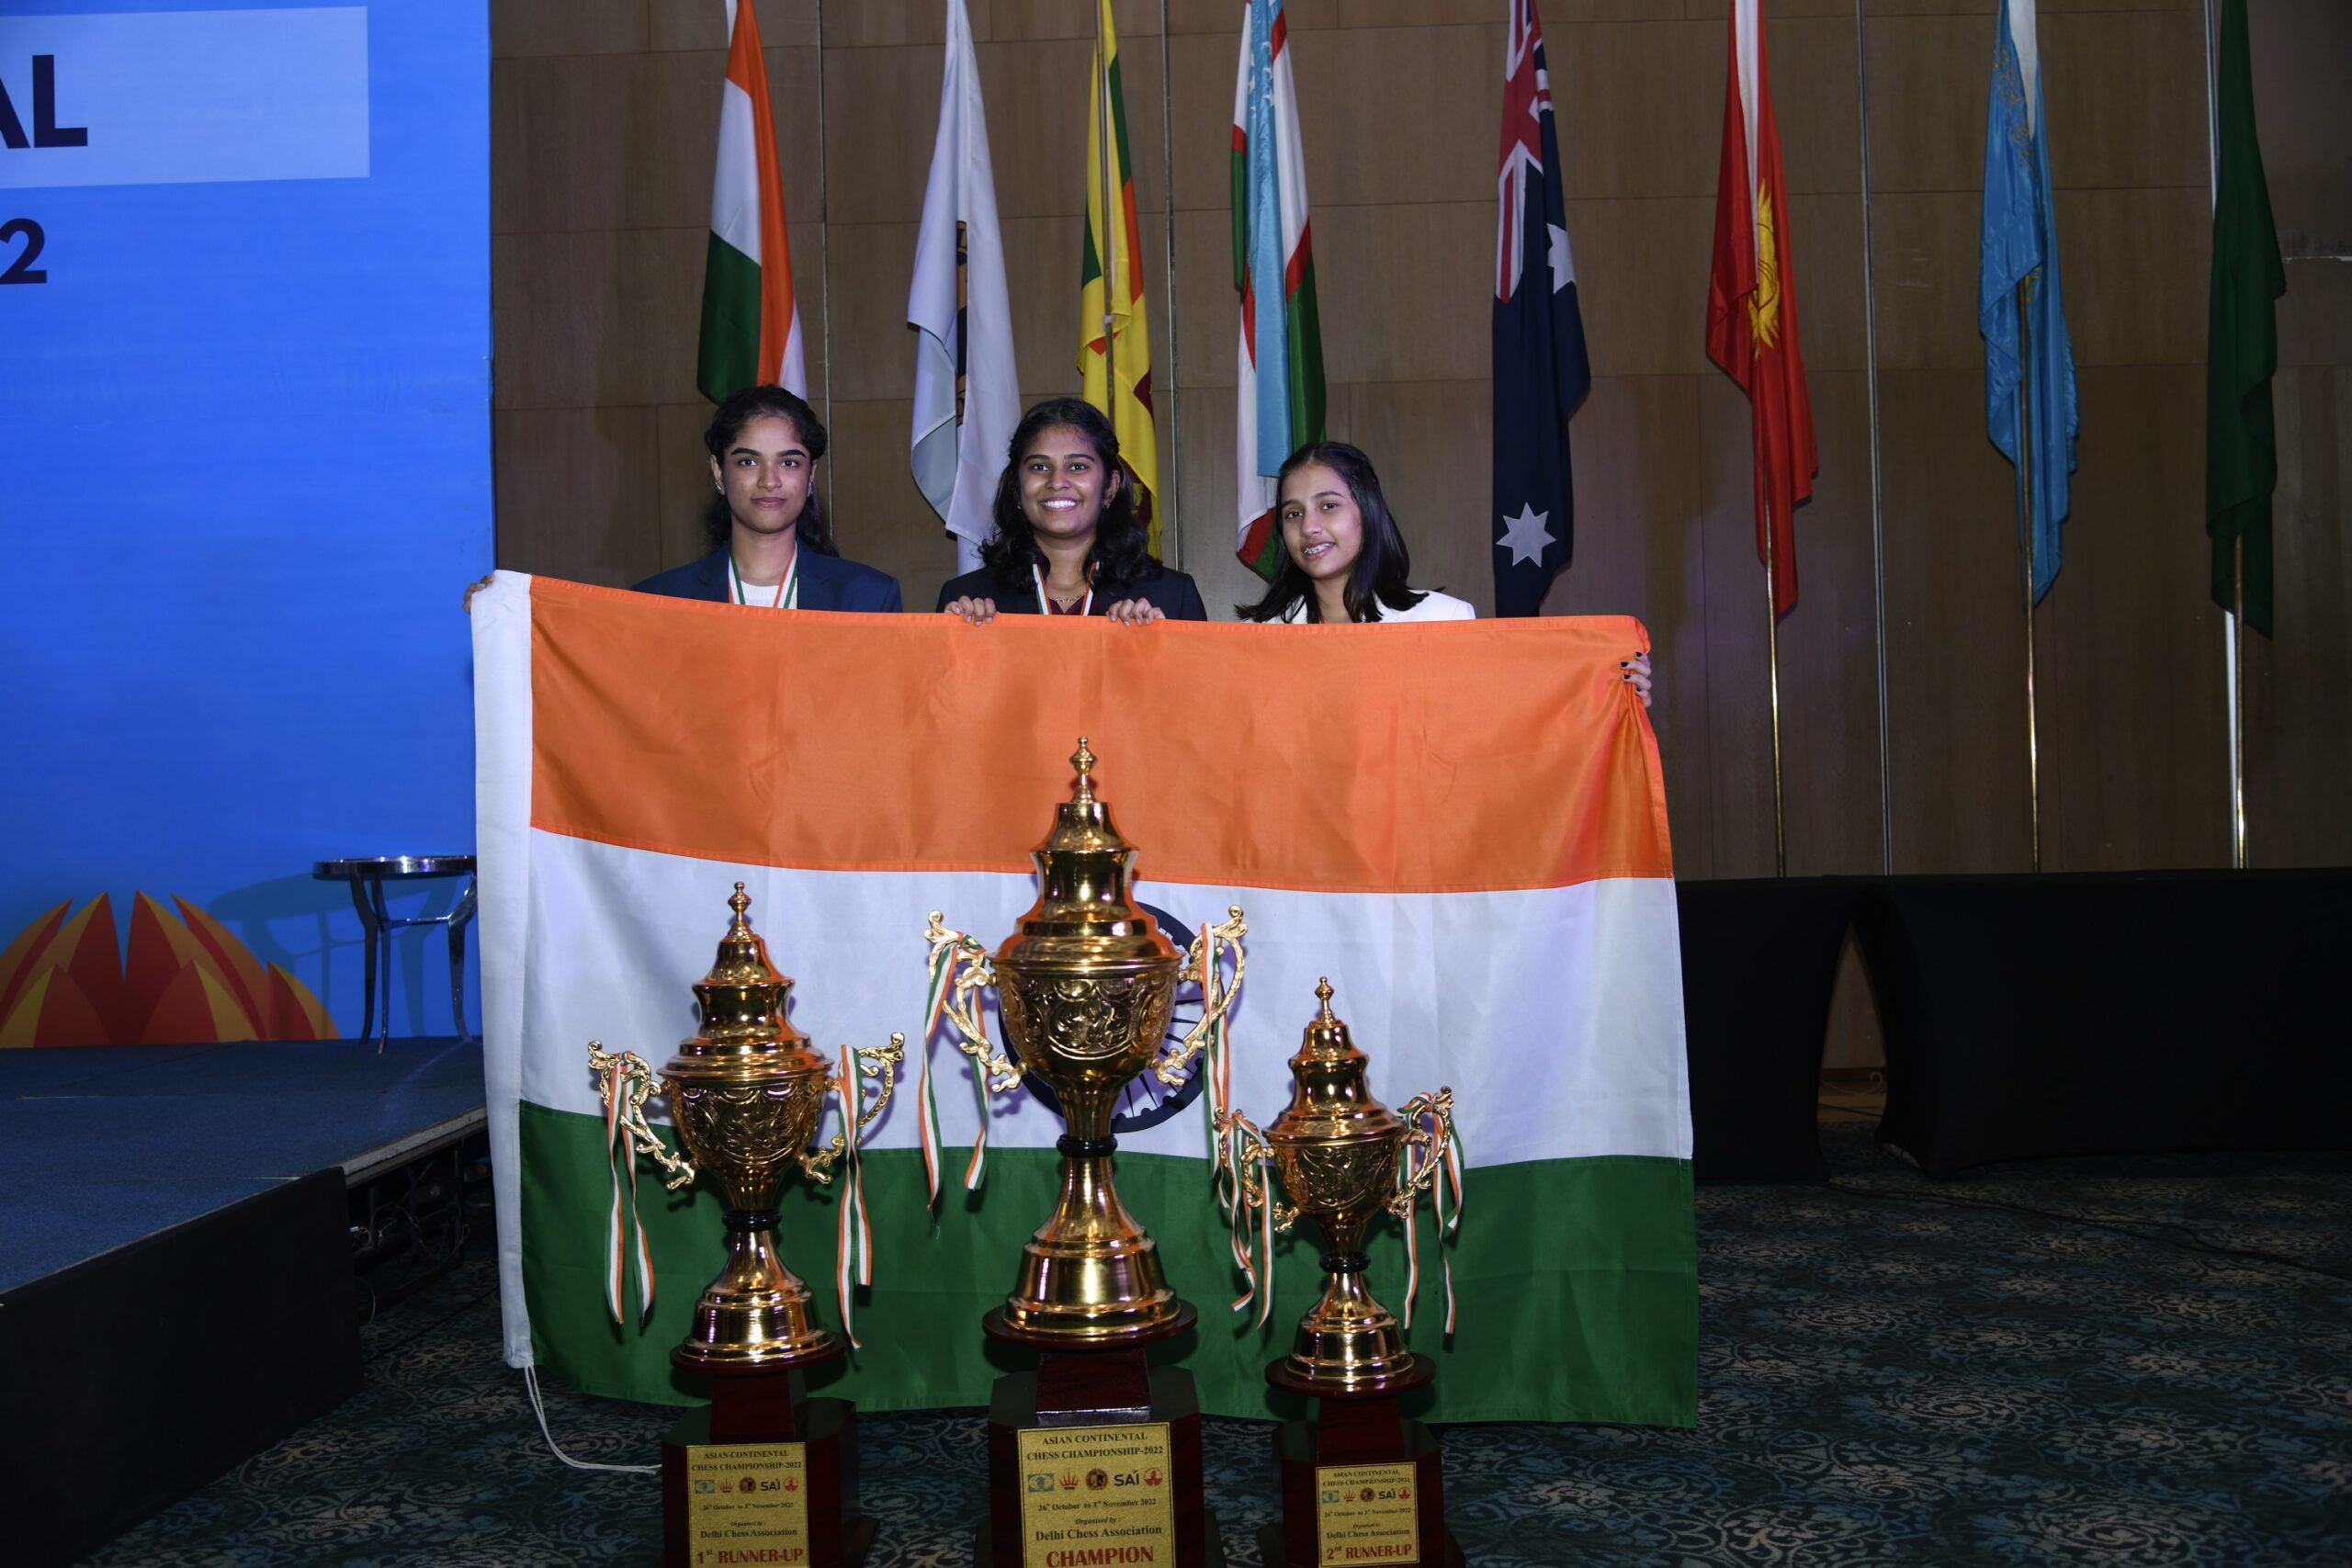 Asian Continental Chess Championship 2022: Harsha Bharathakoti